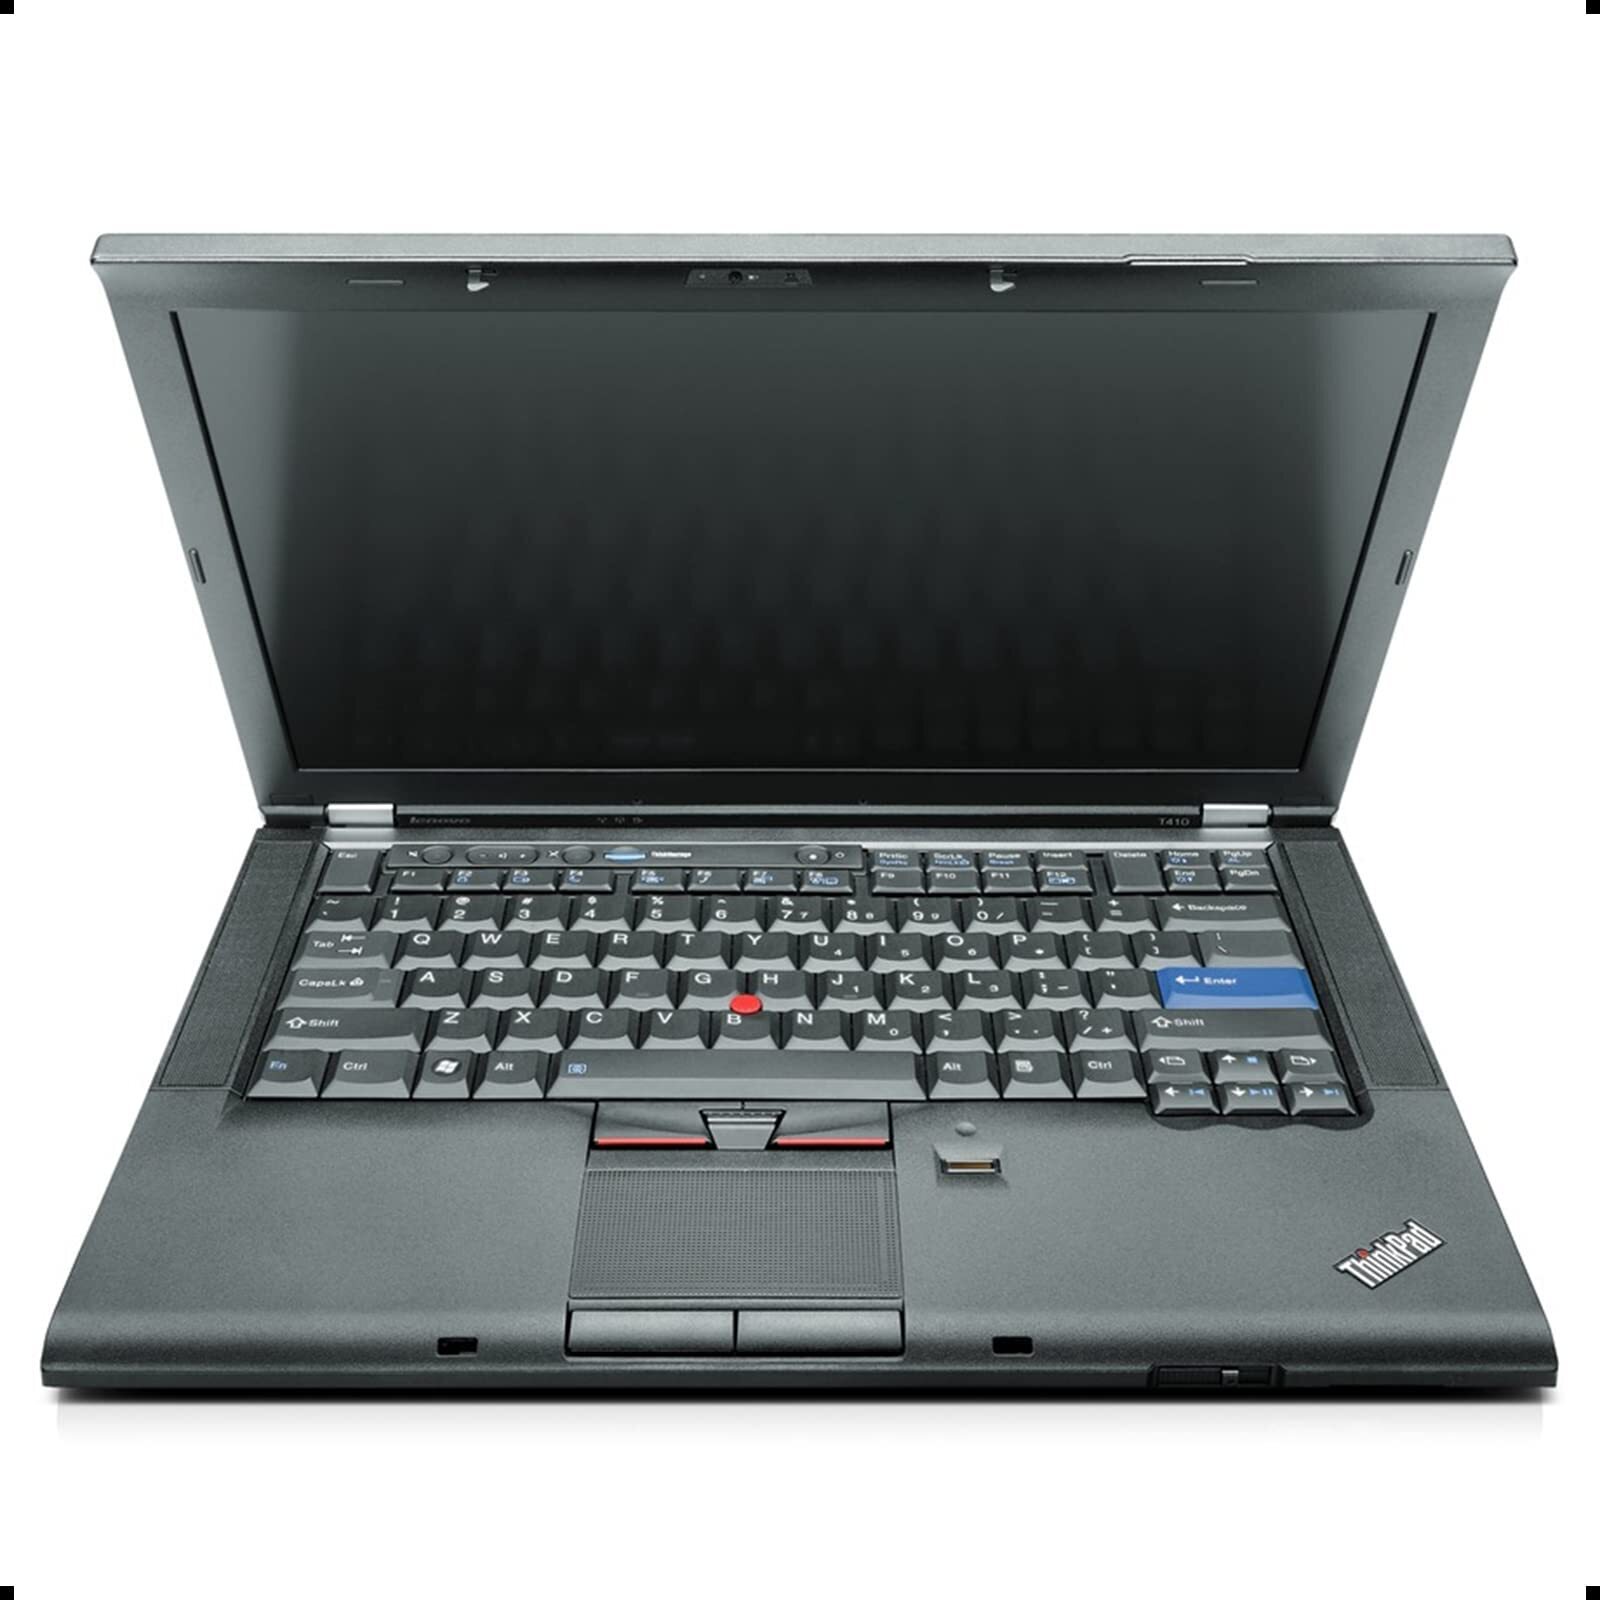 Lenovo ThinkPad T410 Intel i5 520M 2.40Ghz 4GB RAM 160GB HDD 14.1" Win 10 - B Grade